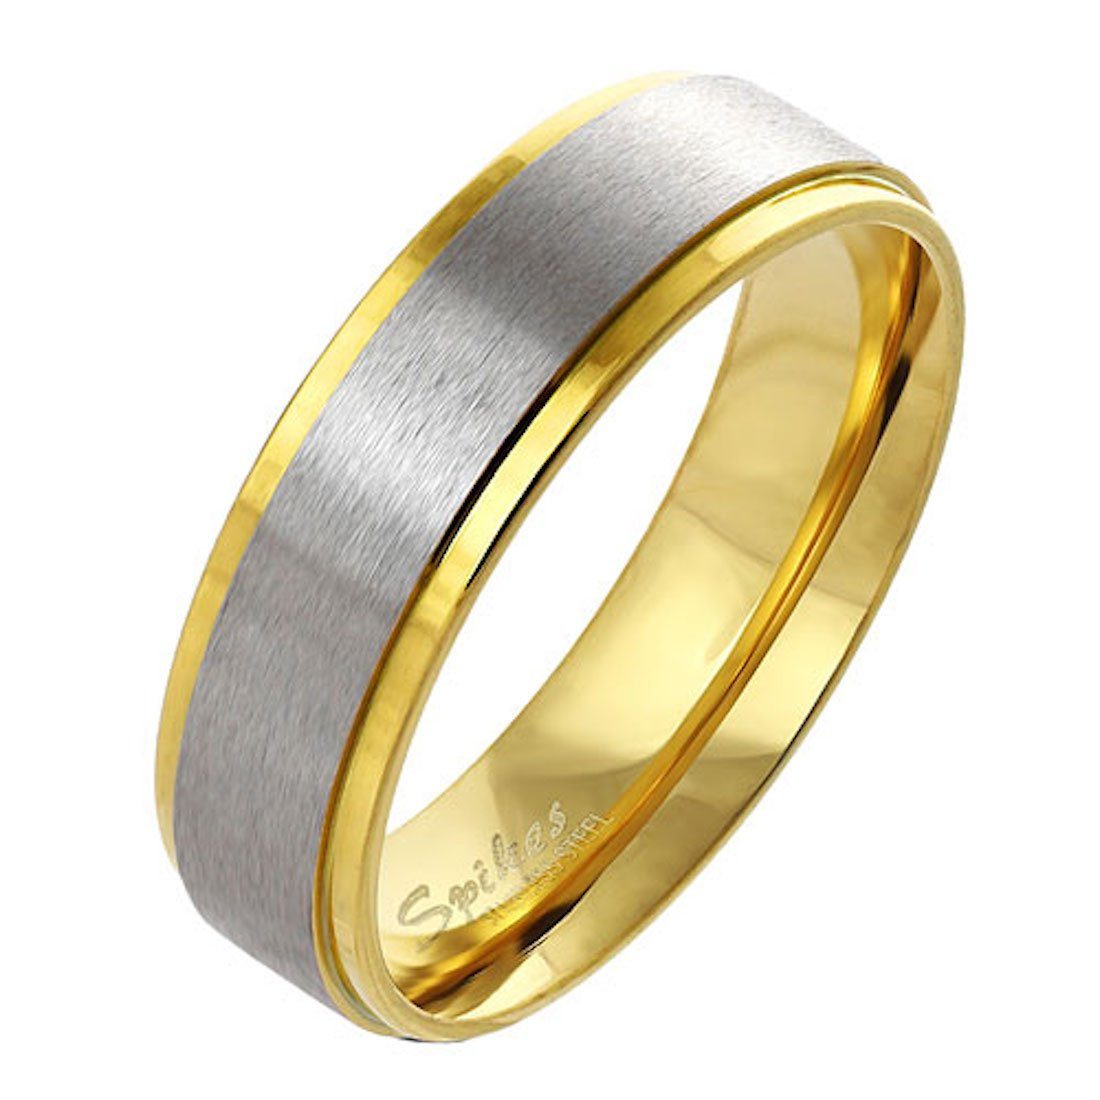 Taffstyle Fingerring Band-Ring Bicolor Partnerring für Damen Herren, Edelstahl gebürstet Herrenring Damenring Partnerring Verlobungsring Gold